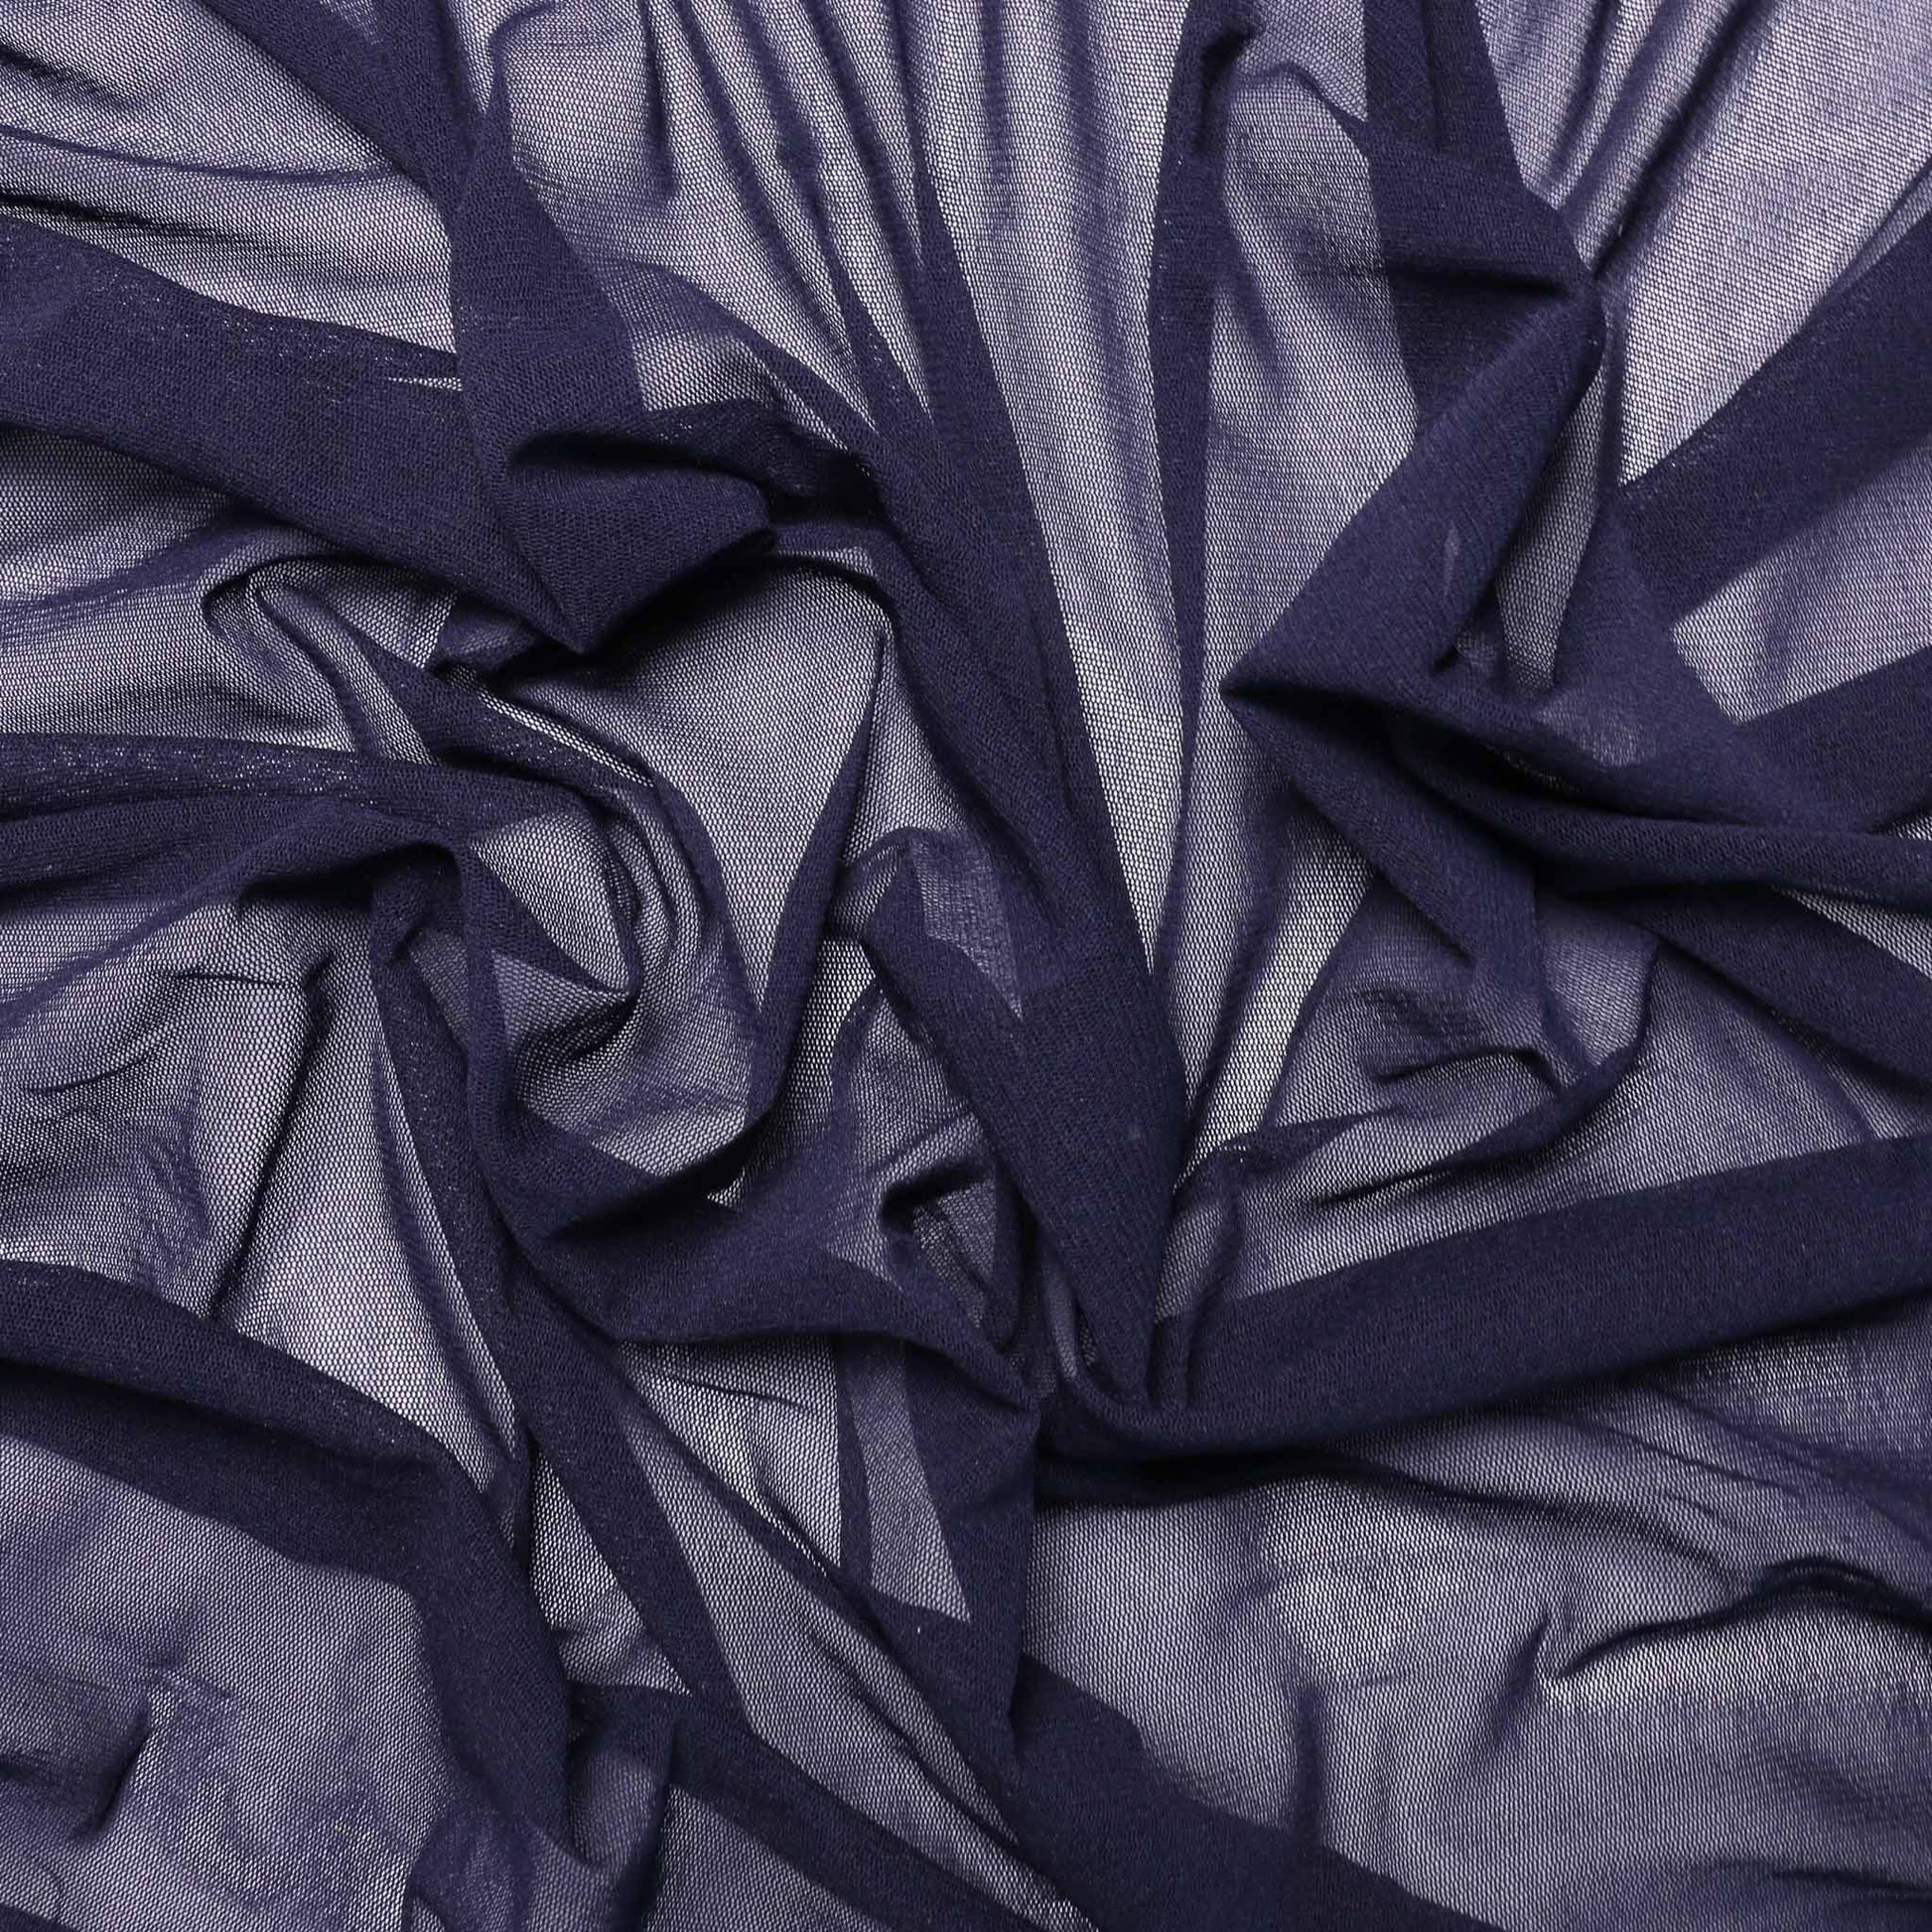 stretchy navy dressmaking netting fabric